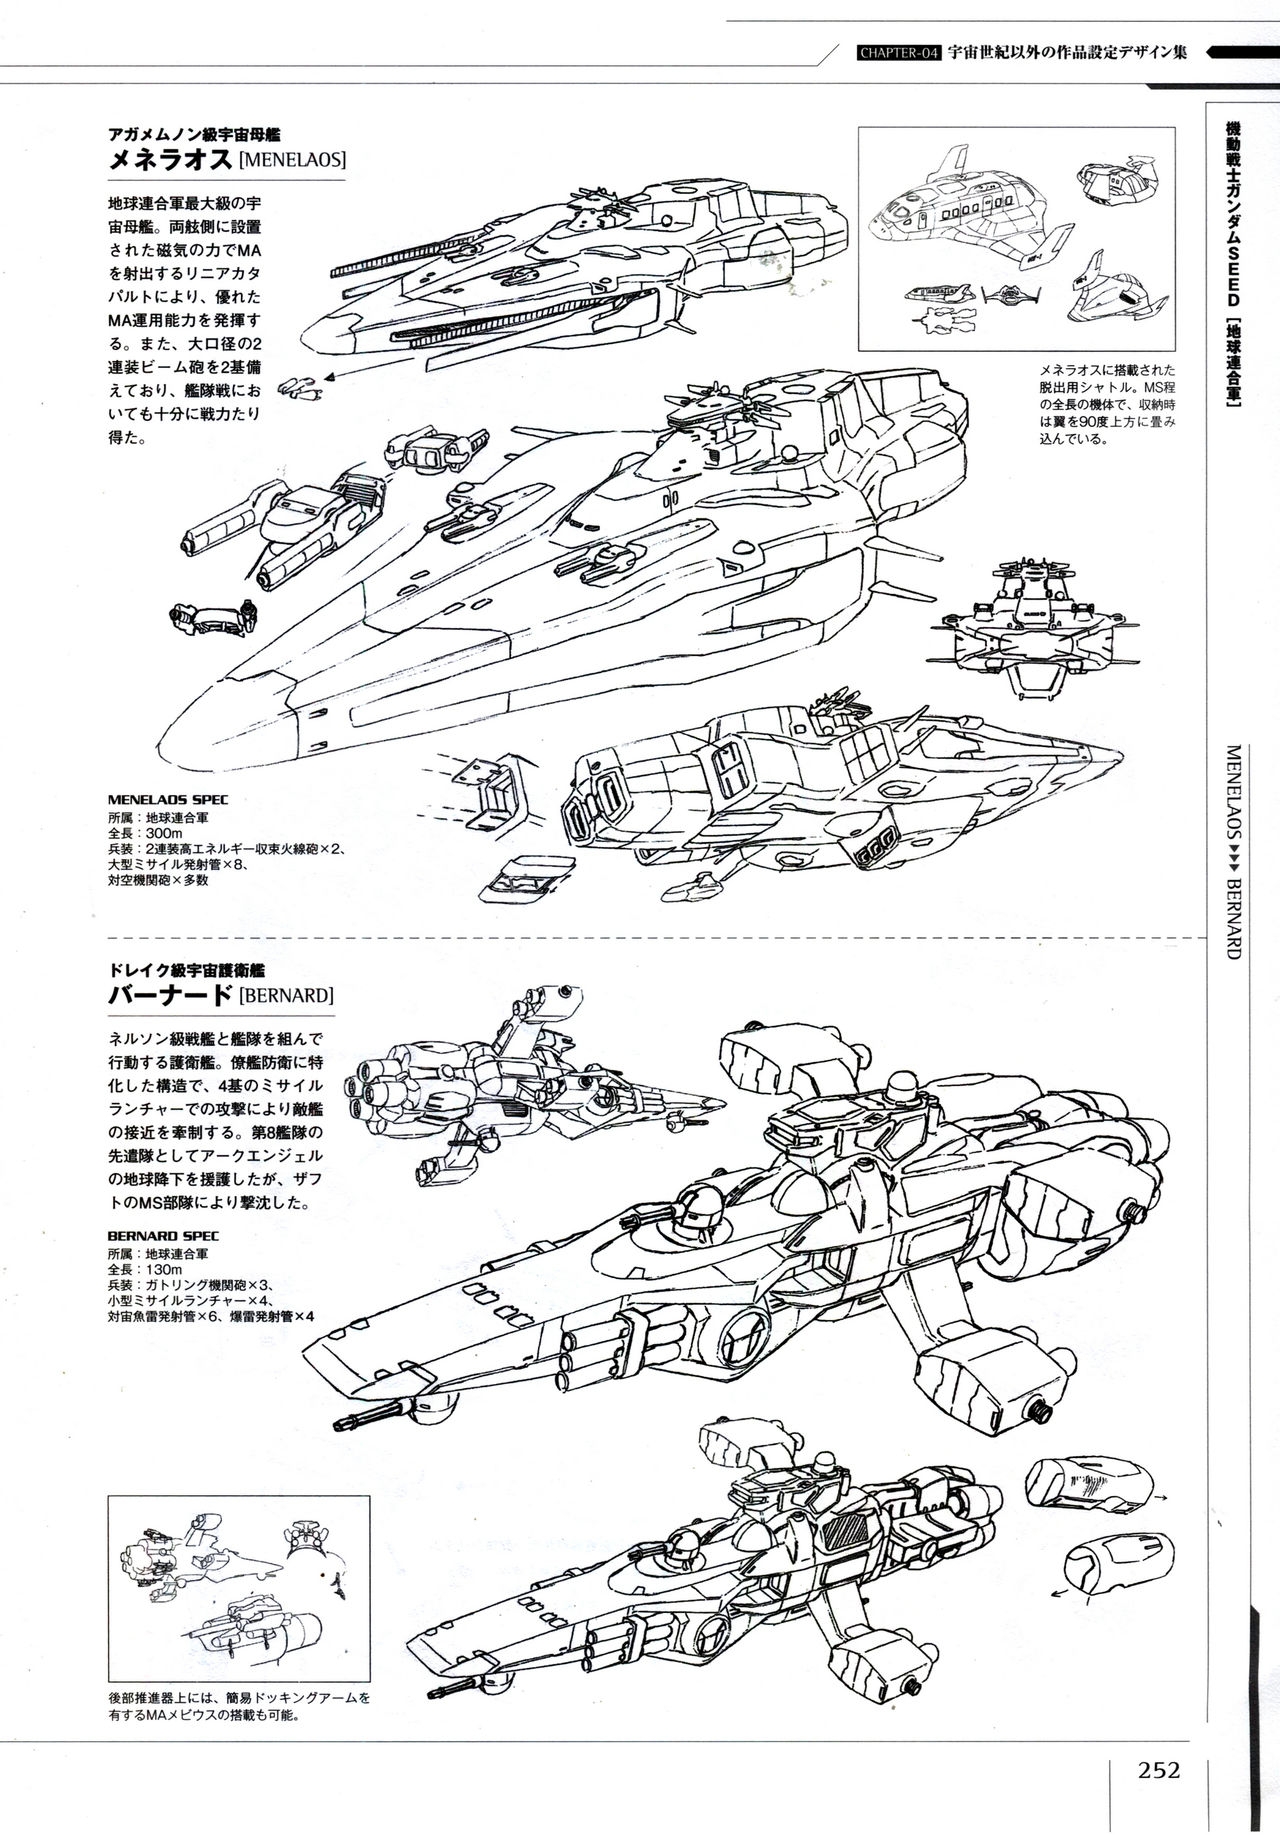 Mobile Suit Gundam - Ship & Aerospace Plane Encyclopedia - Revised Edition 257